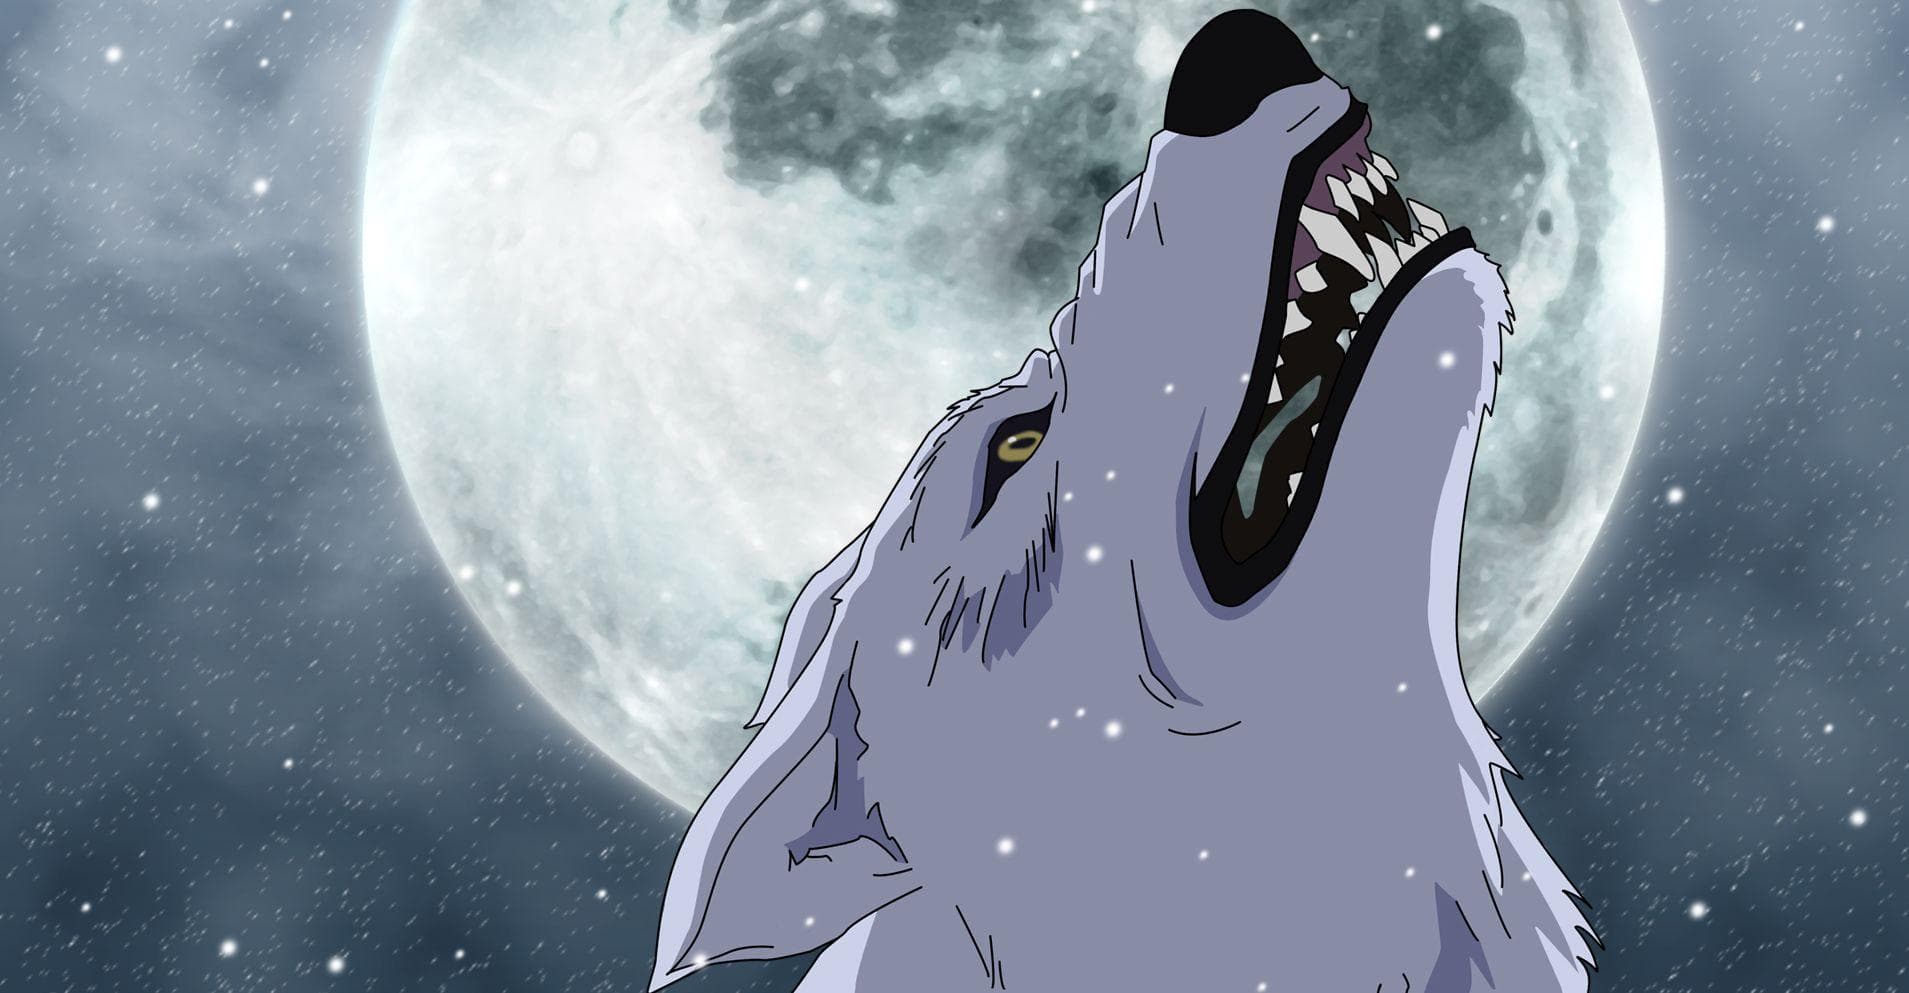 Animated Wolf Movies List